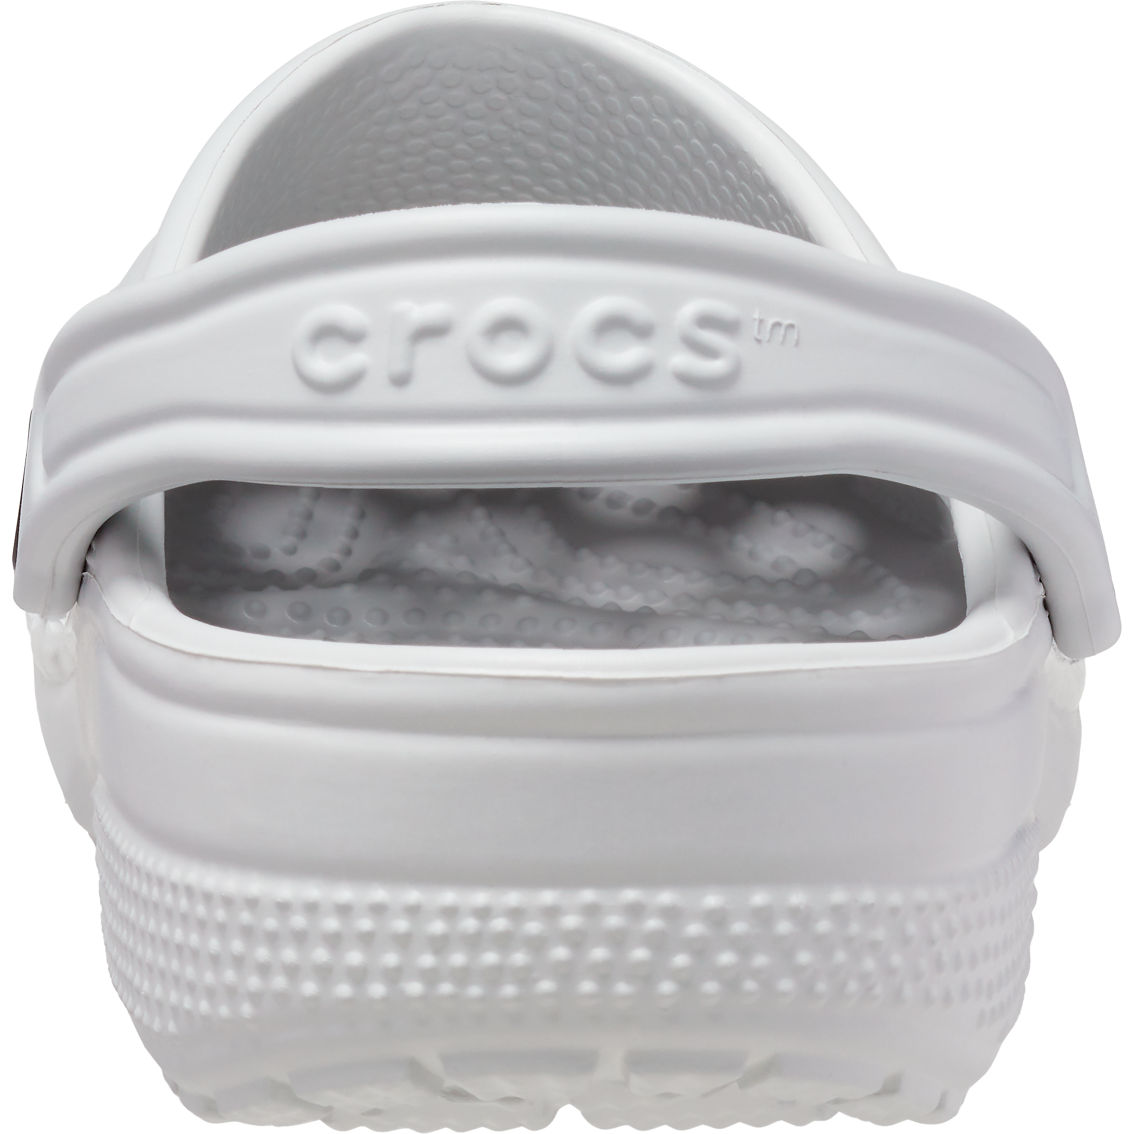 Crocs Women's Classic Clogs - Image 6 of 7